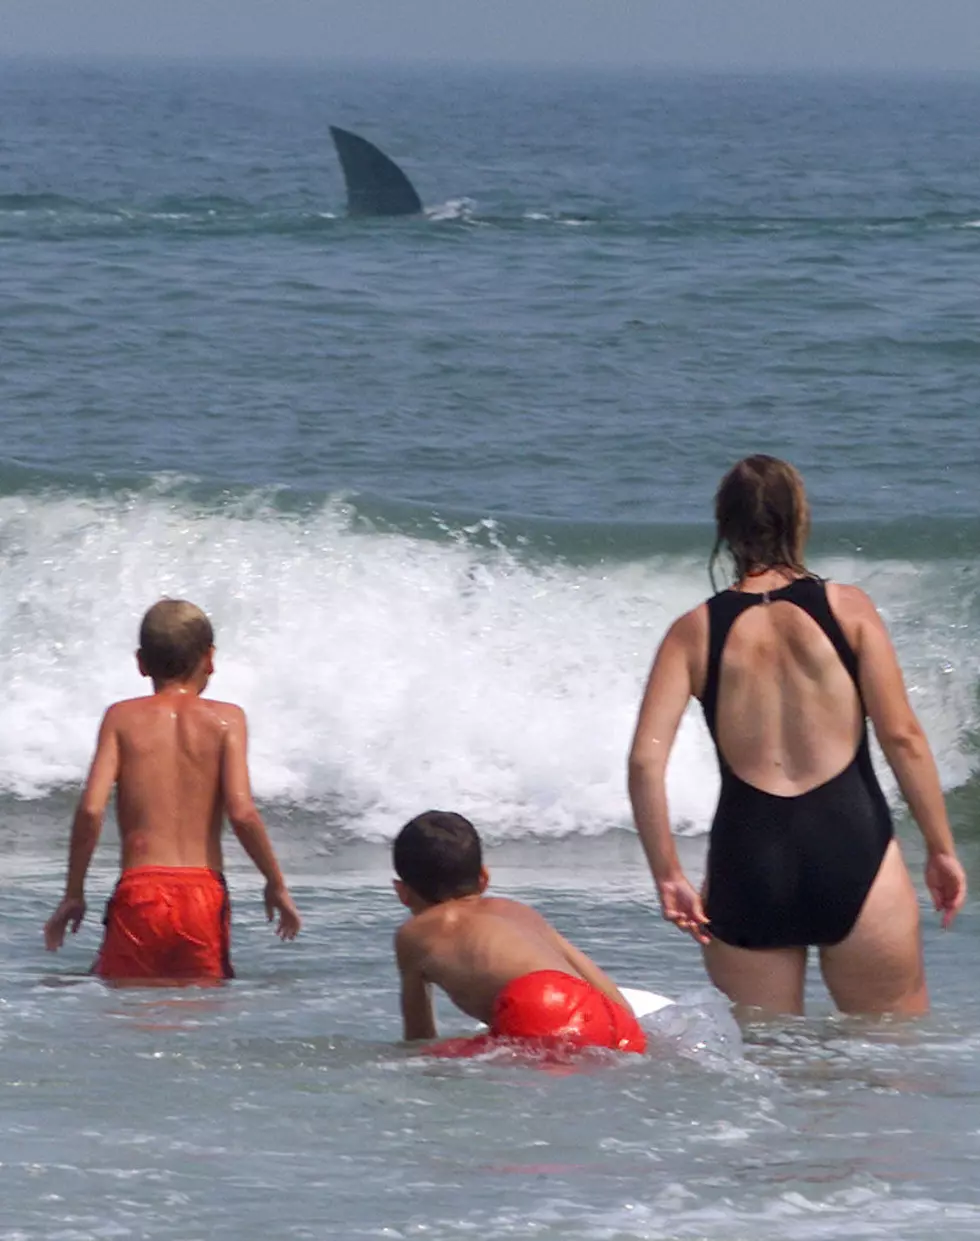 Alabama: Video Of Giant Shark Hunting Near Shore In Orange Beach